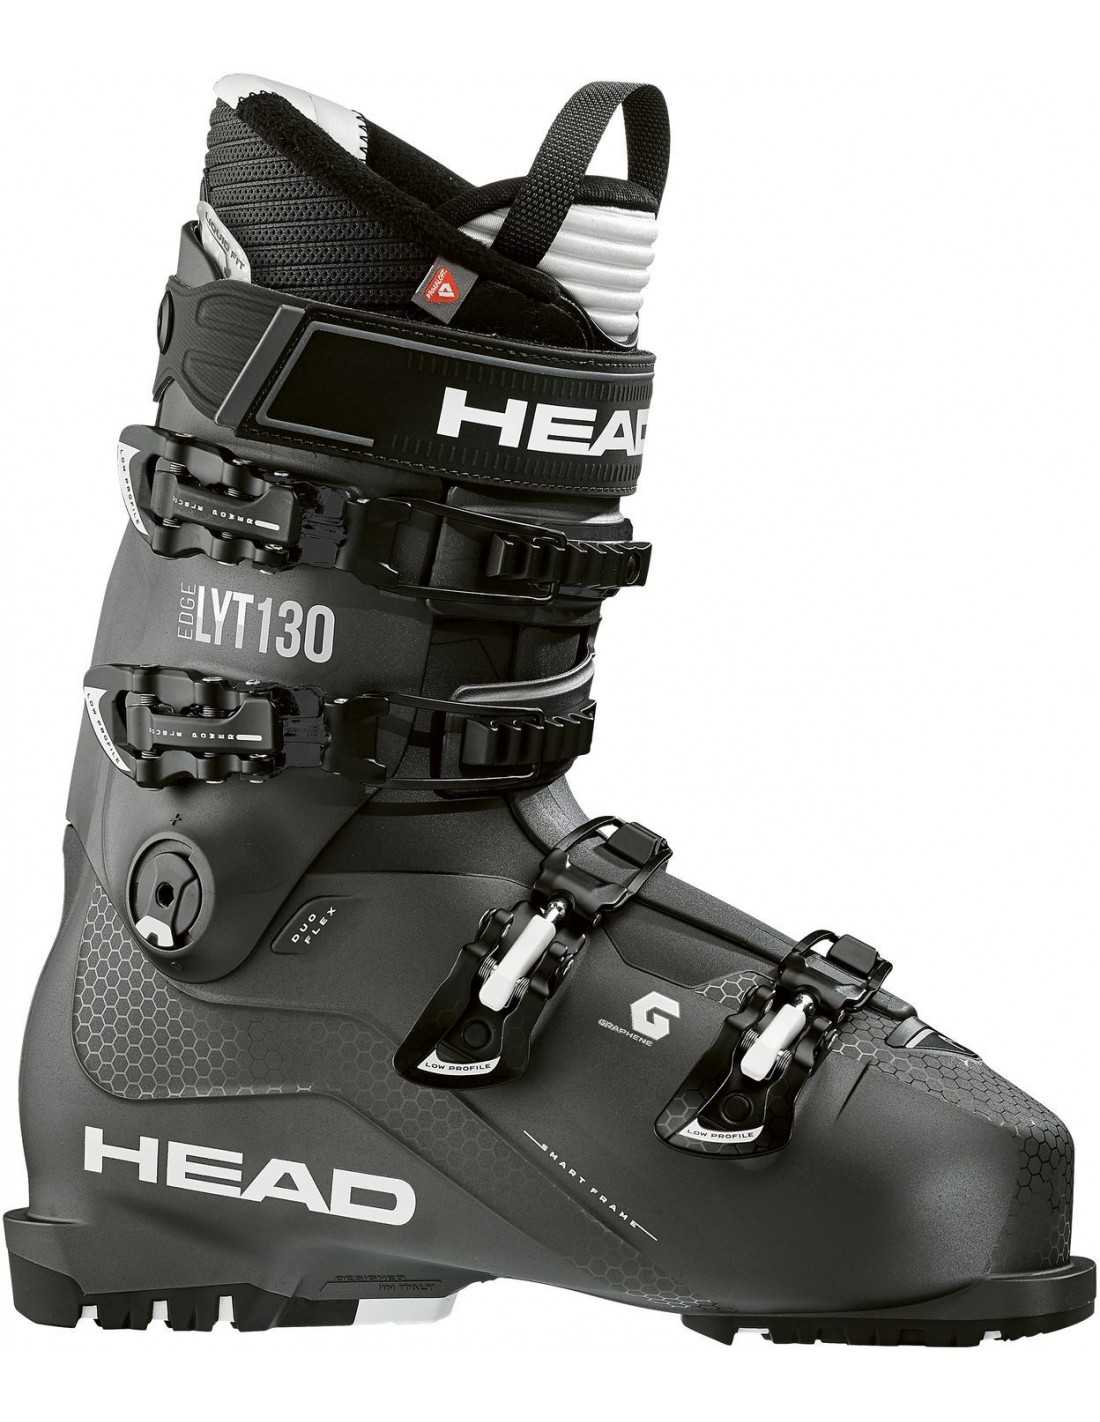 Botas esqui Boots HEAD EDGE 130